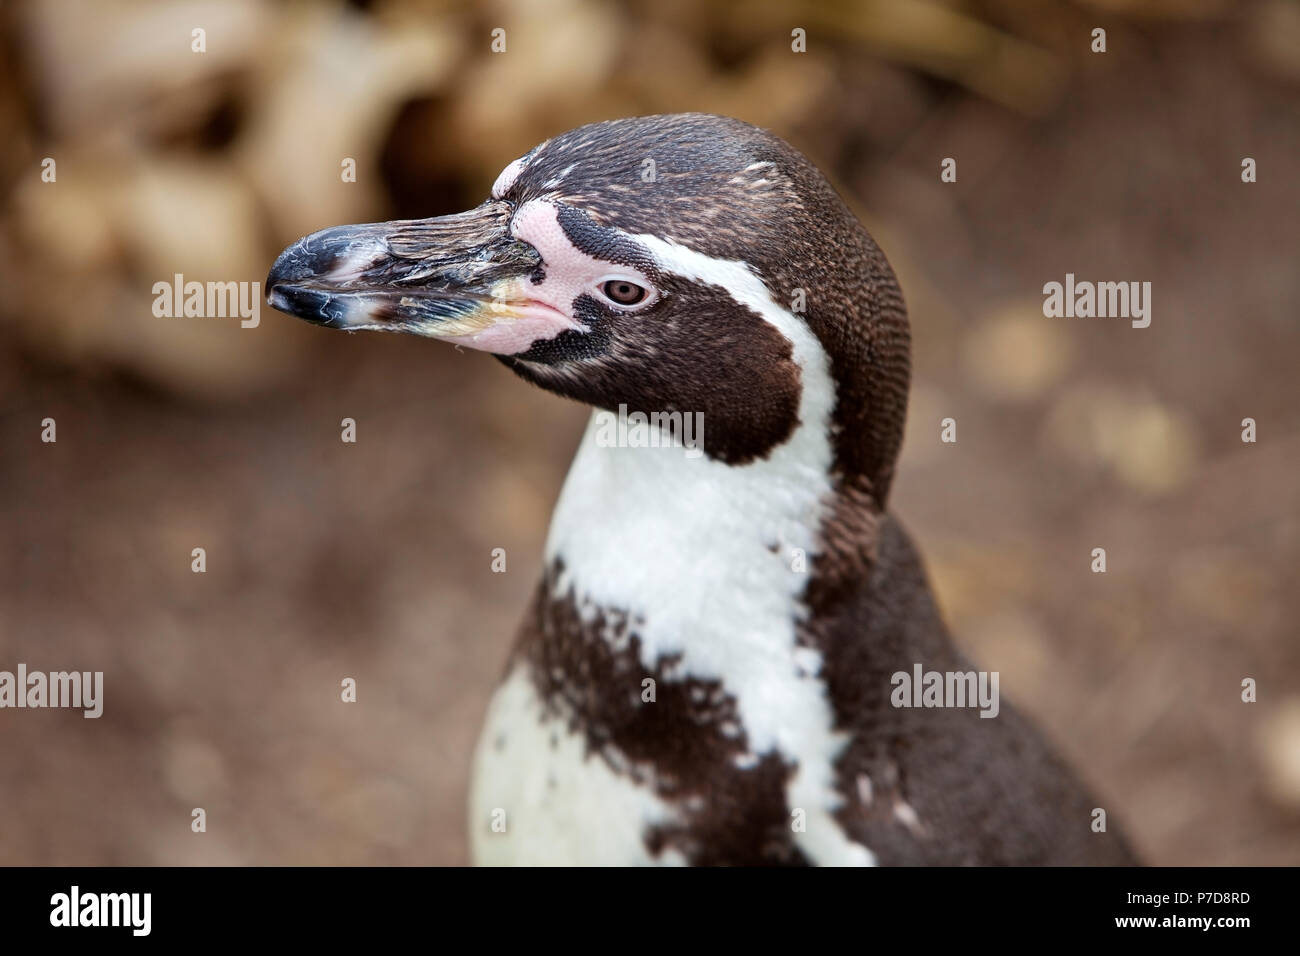 Humboldt penguin (Spheniscus humboldti), animal portrait, captive, Germany Stock Photo